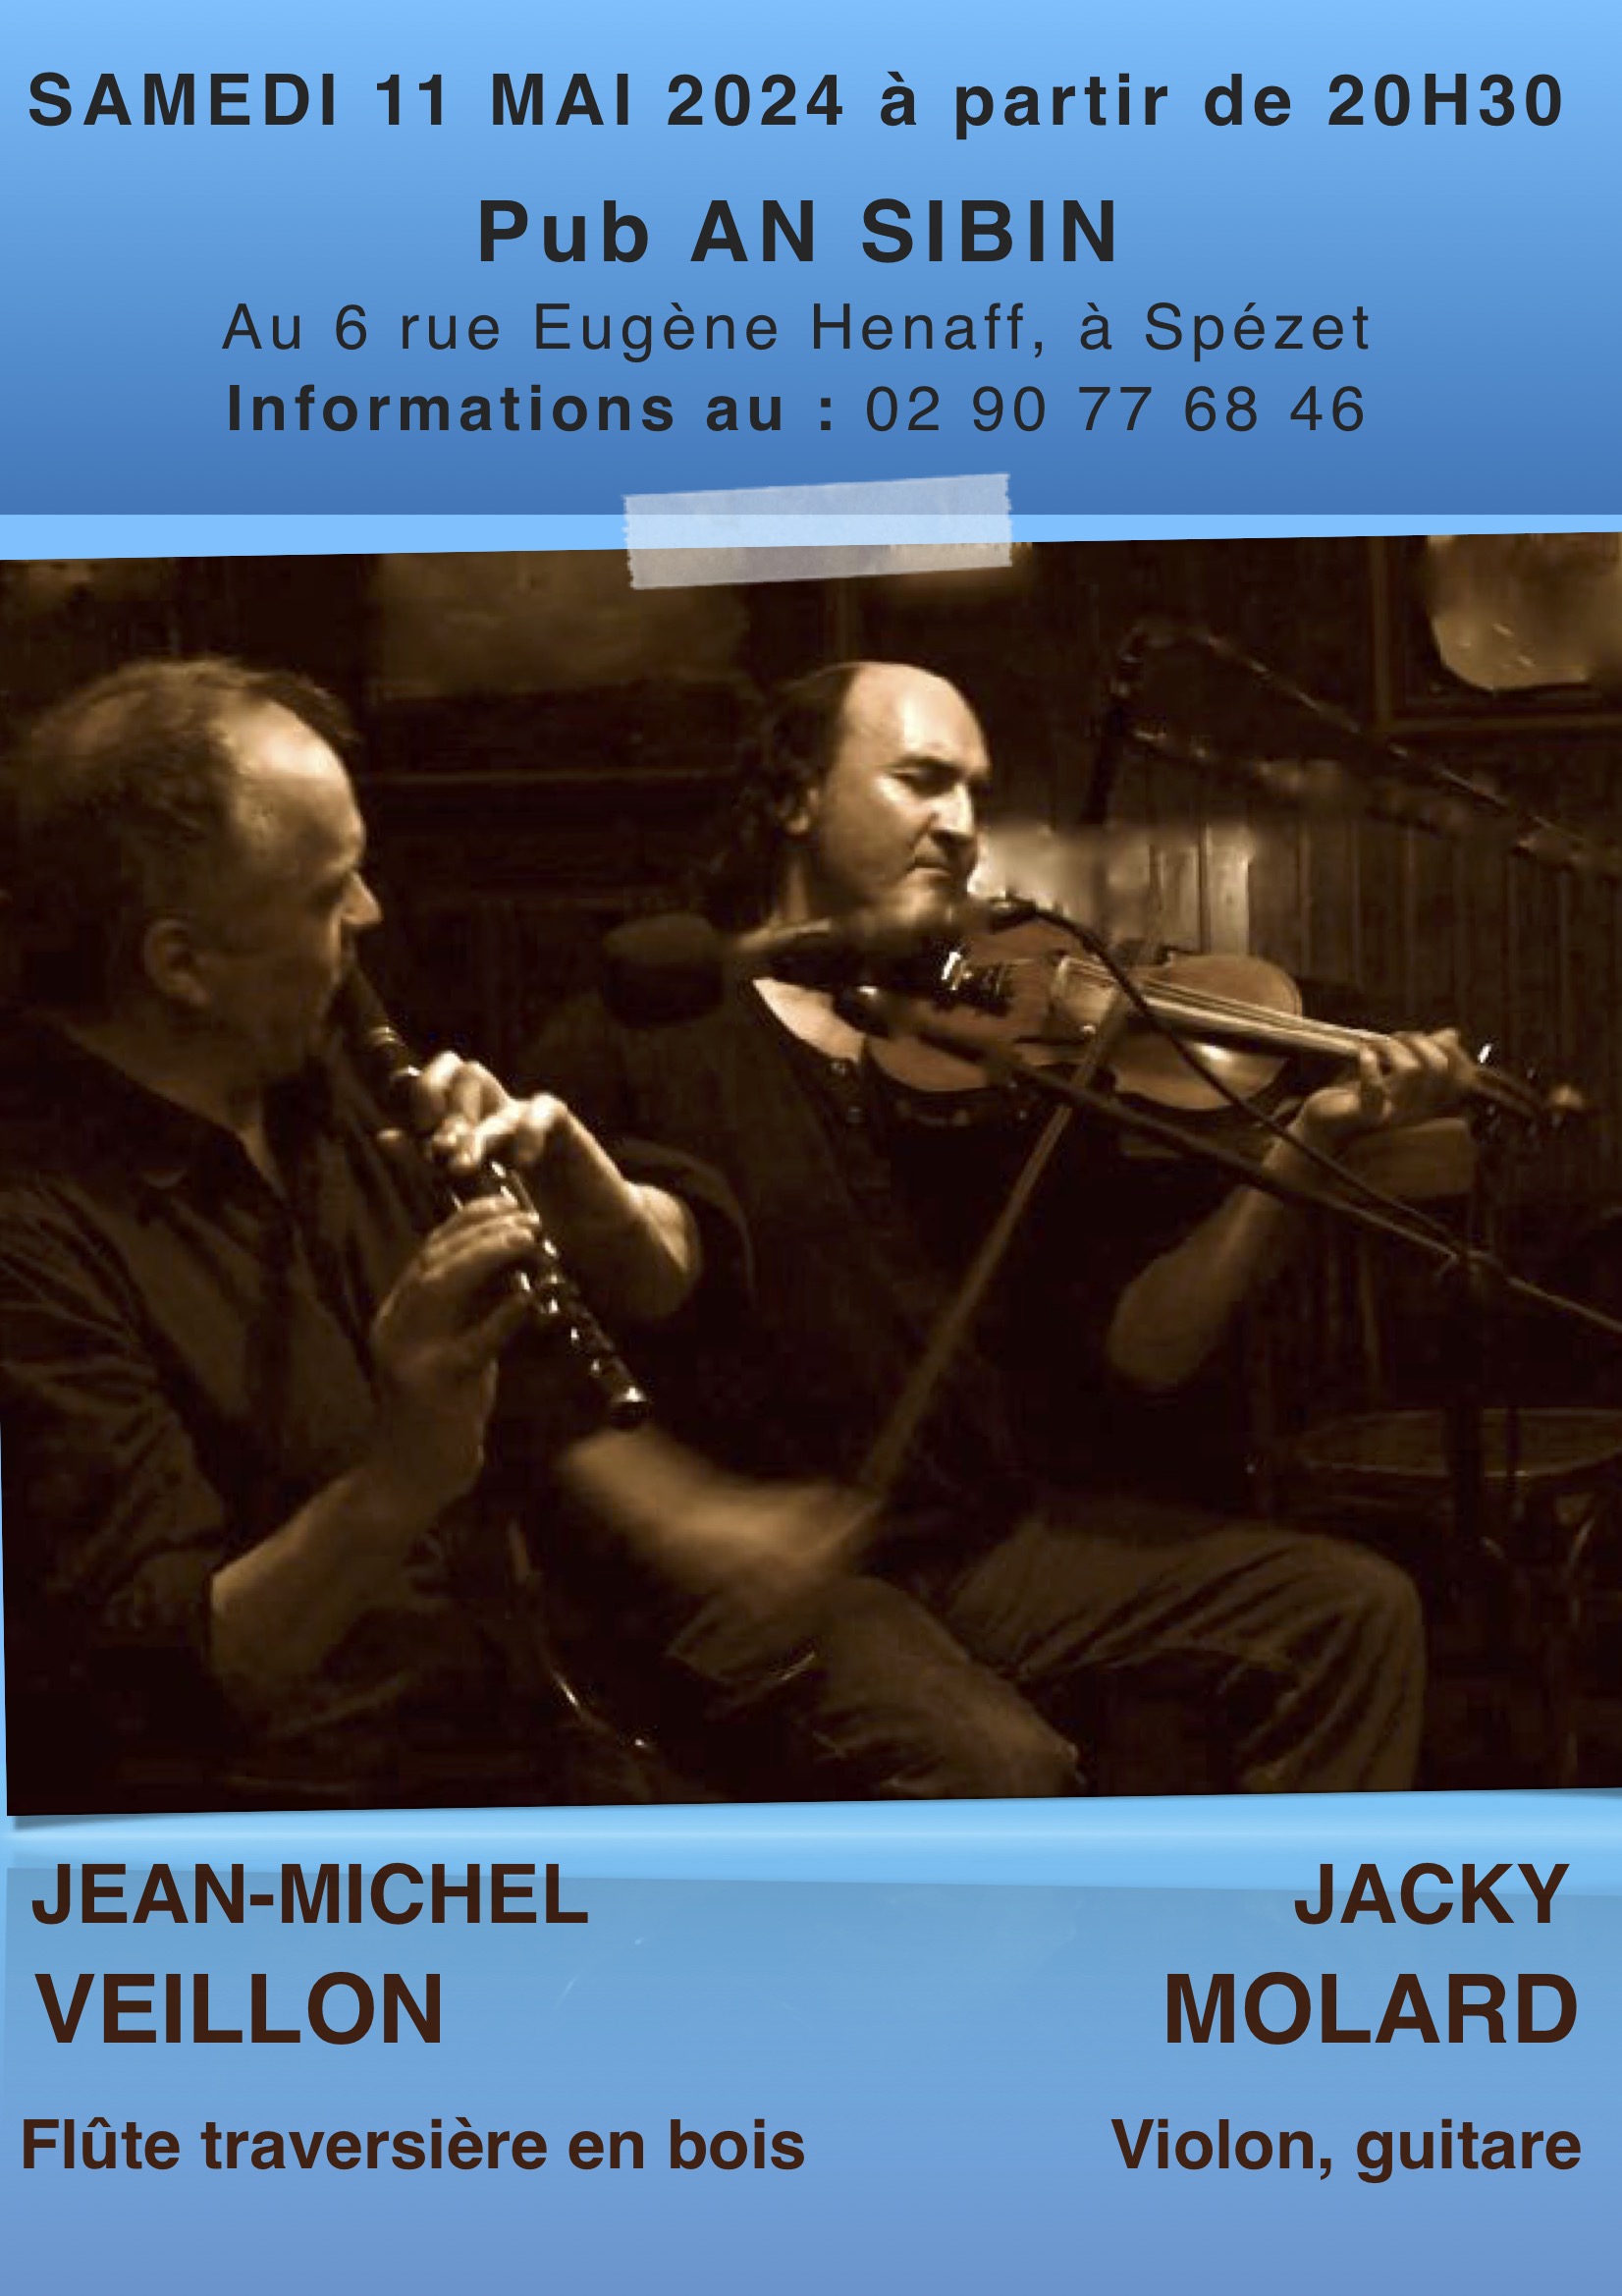 Jacky Molard & Jean-Michel Veillon en concert au An Síbín à Spézet @ Pub An Síbín